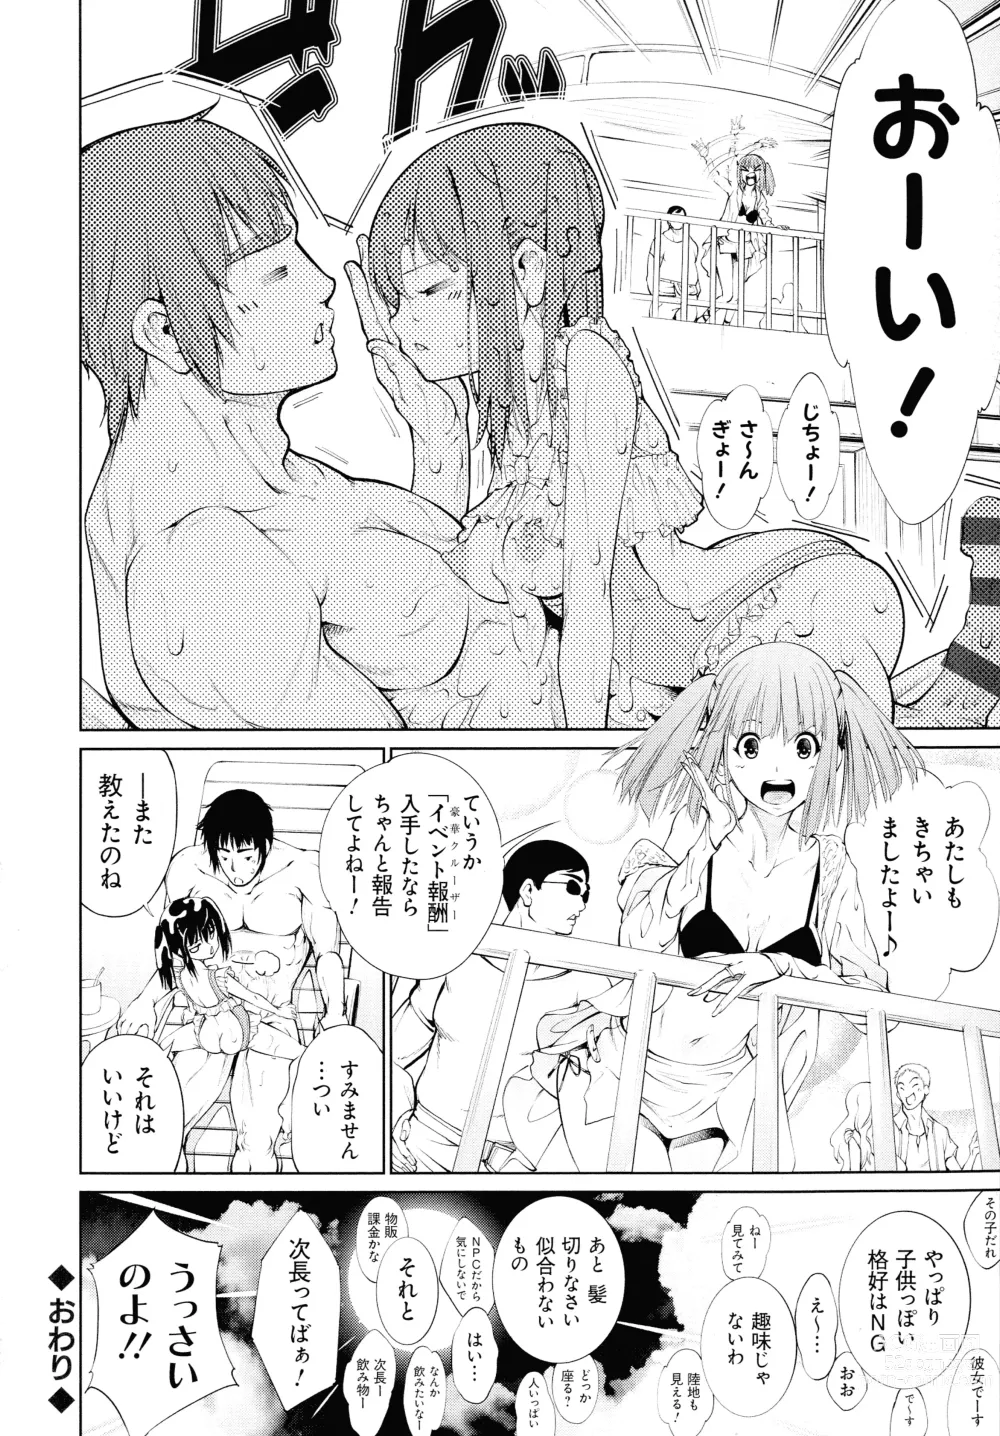 Page 242 of manga Dennou Bitch -Lets Play!-